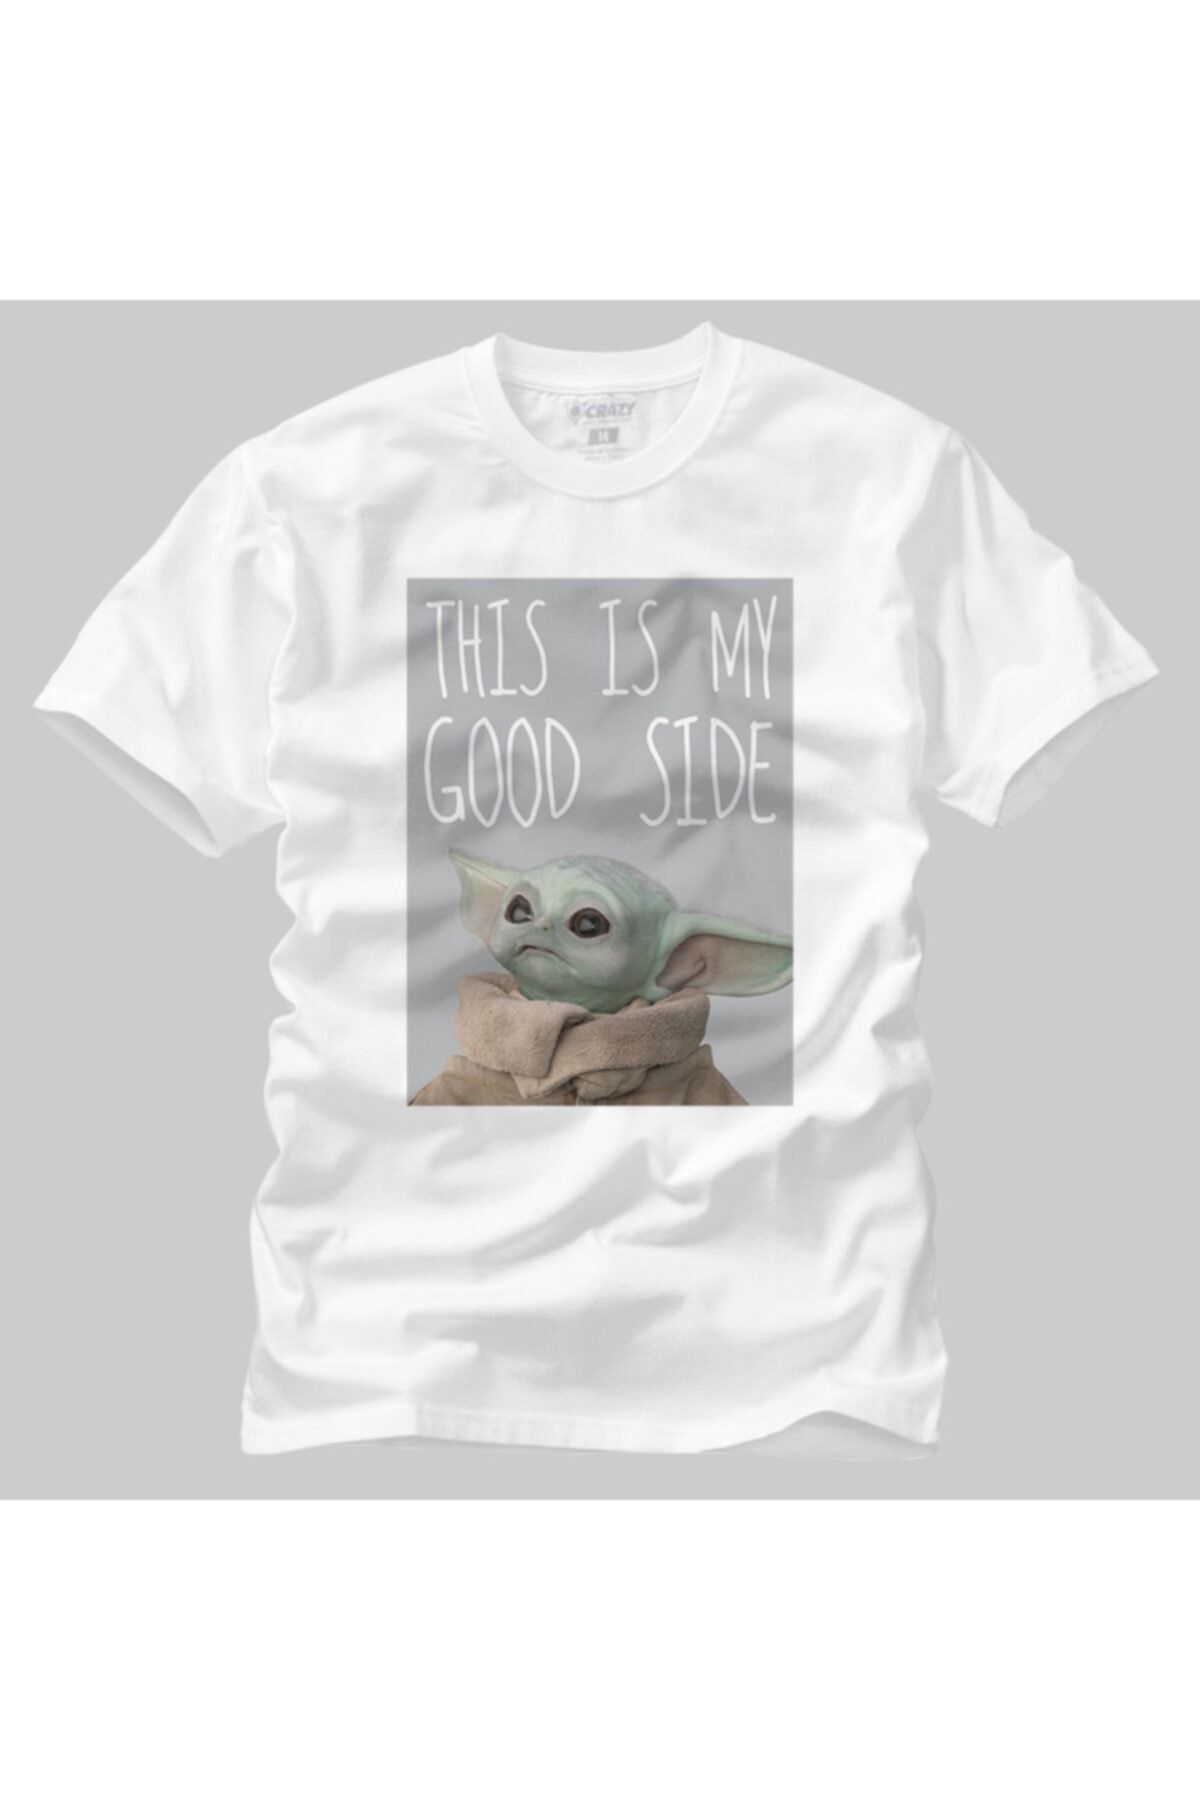 Crazy Erkek Star Wars Baby Yoda Good Side  T-Shirt